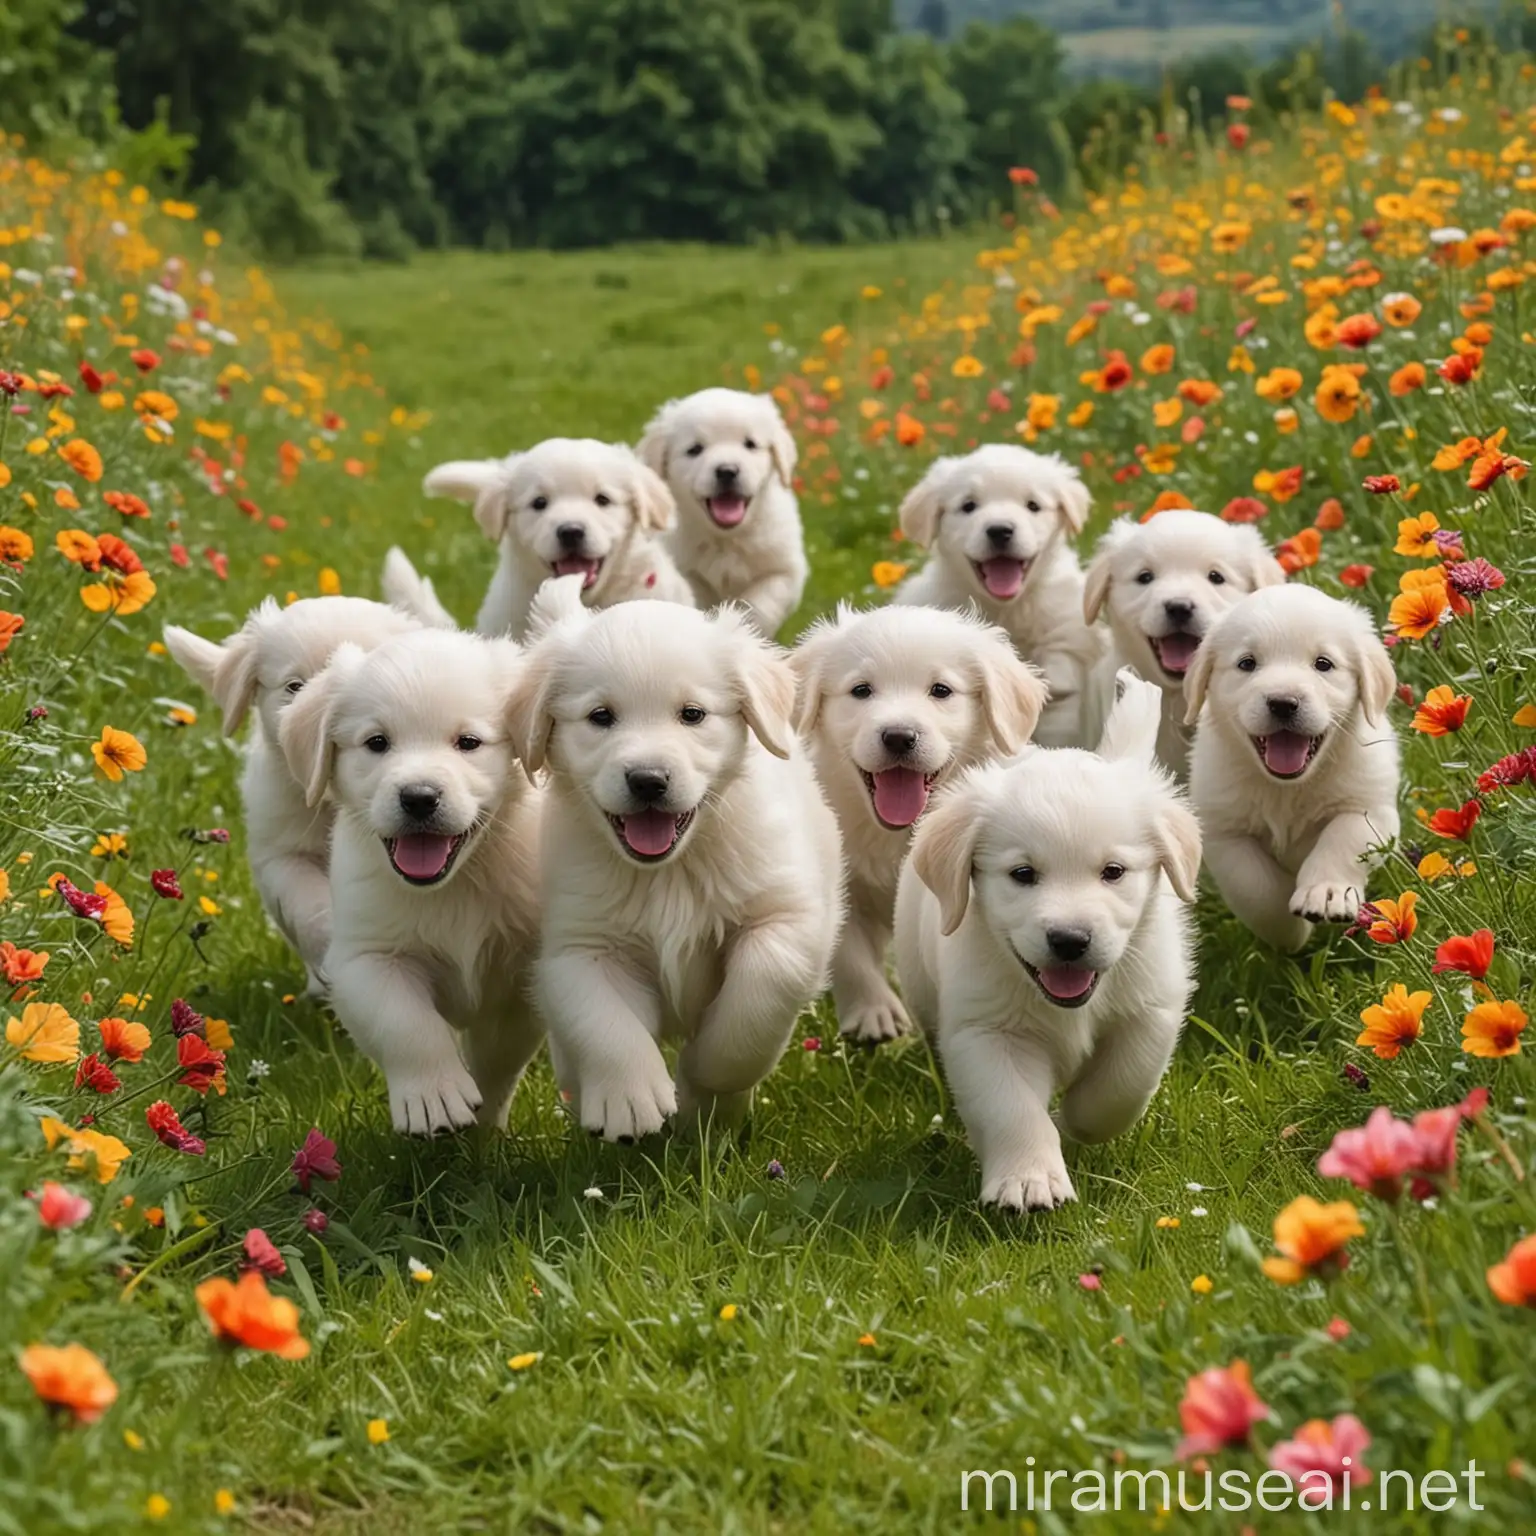 Playful White Golden Retriever Puppies Running in FlowerFilled Meadow